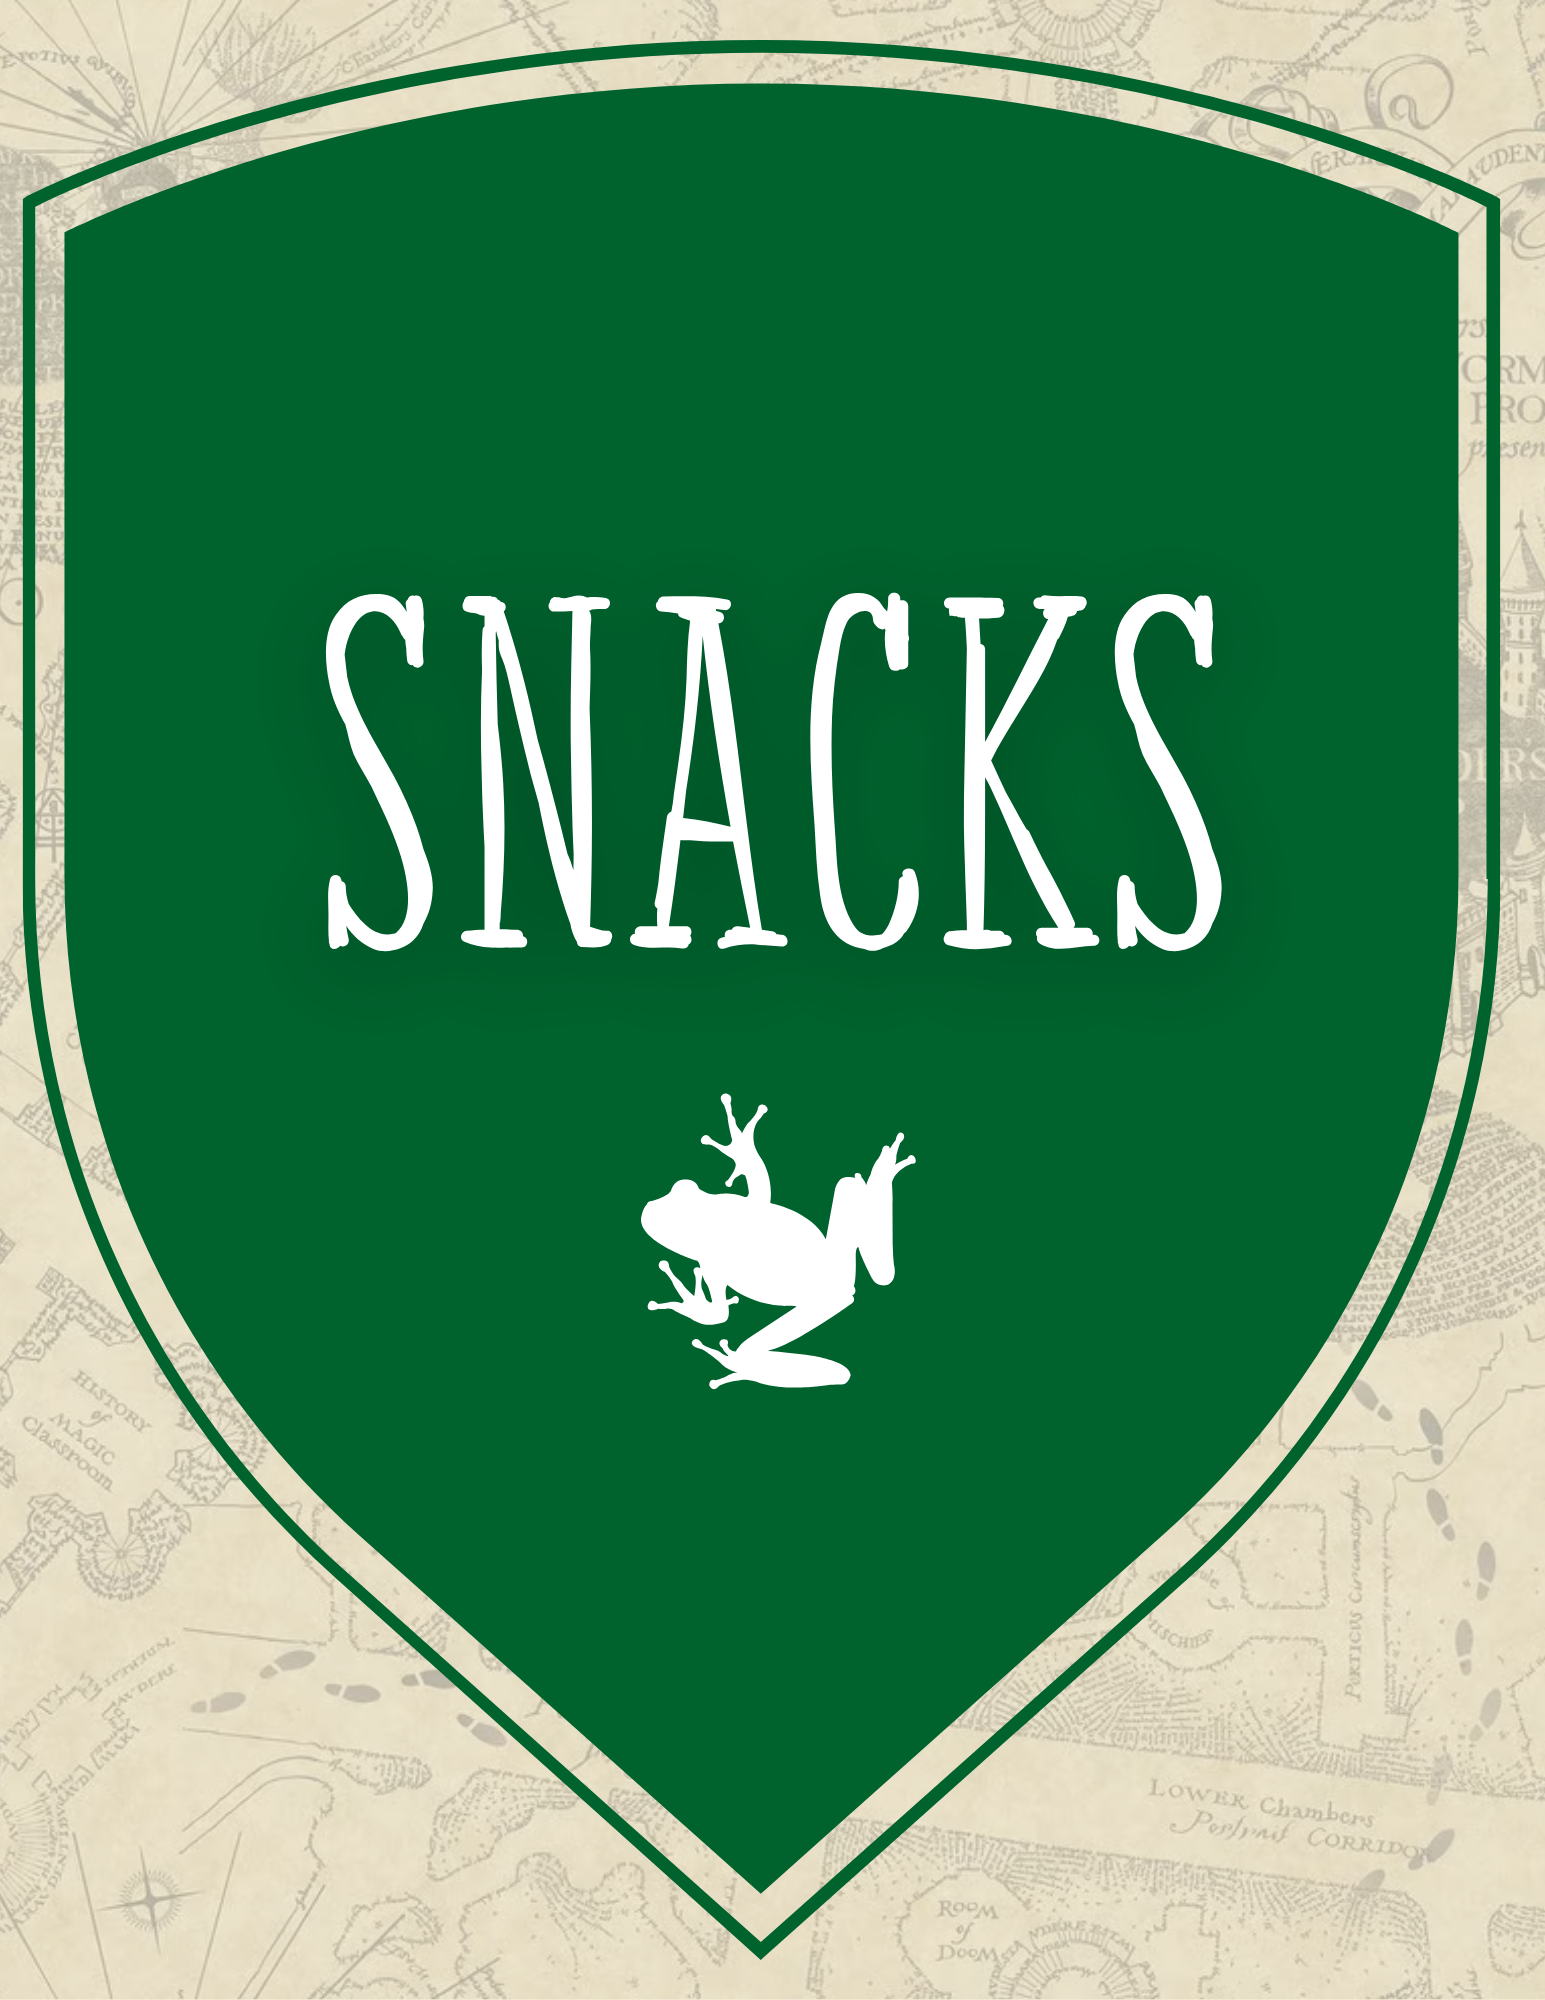 Banner titled "snacks"